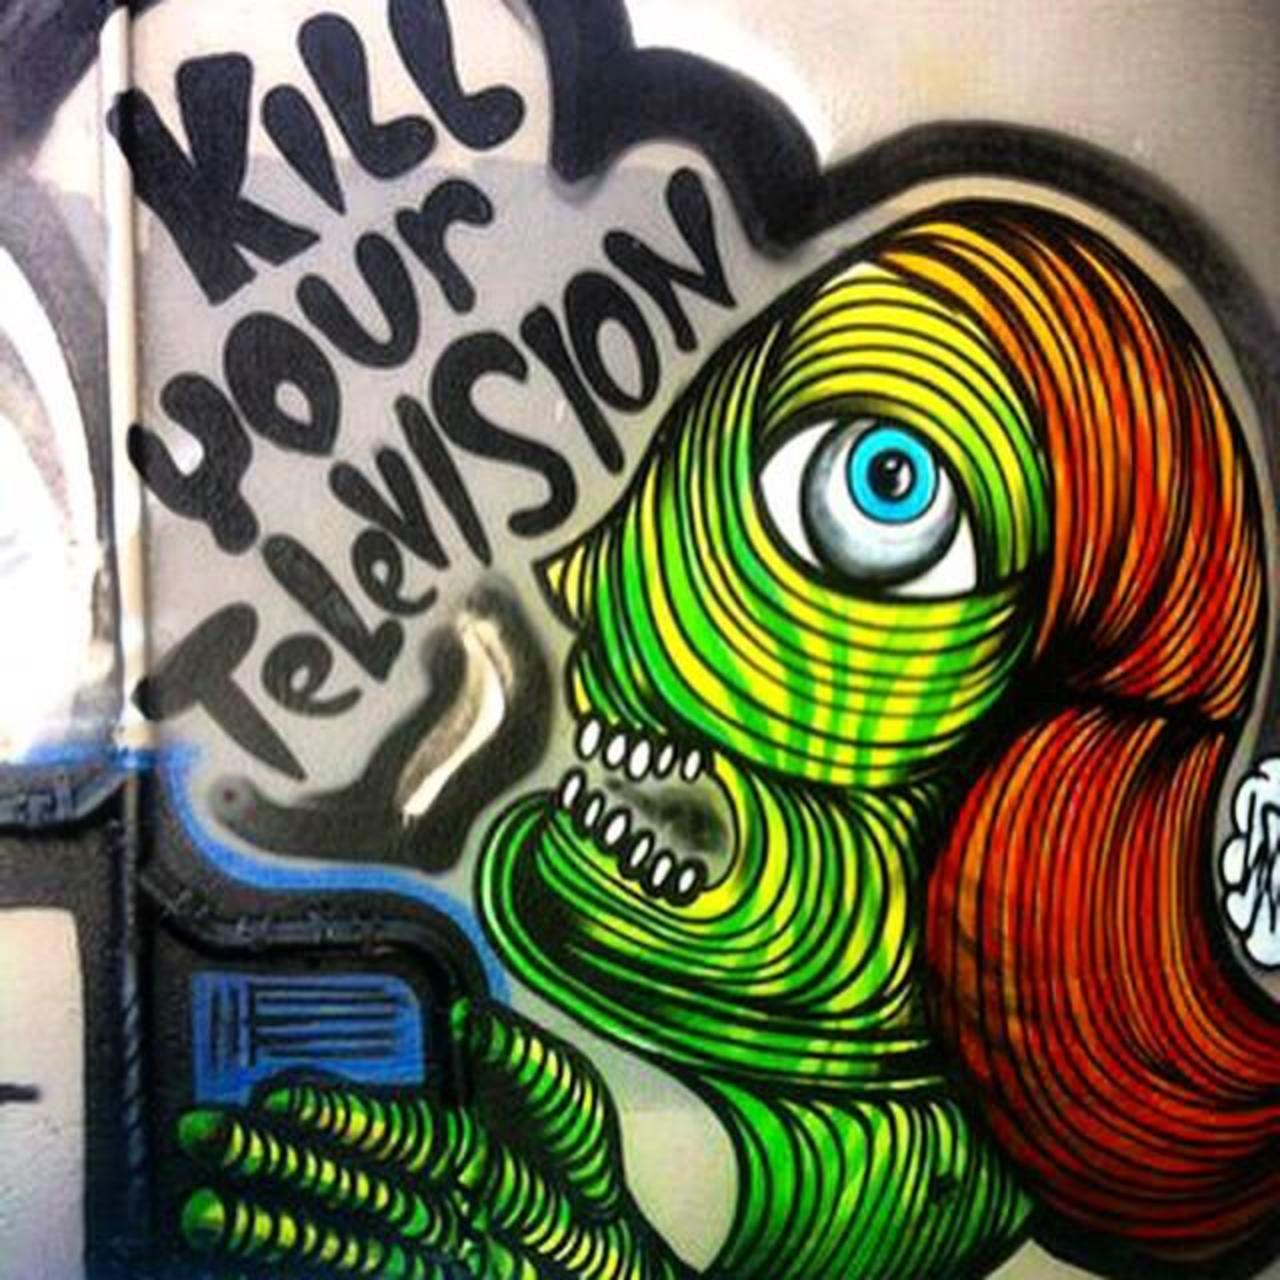 #Streetart by @septerhed in #LosAngeles #publicart #urbanart #graffiti #instagraffiti #graffart #graff #graffitiart… http://t.co/dZ8KAp8BGi